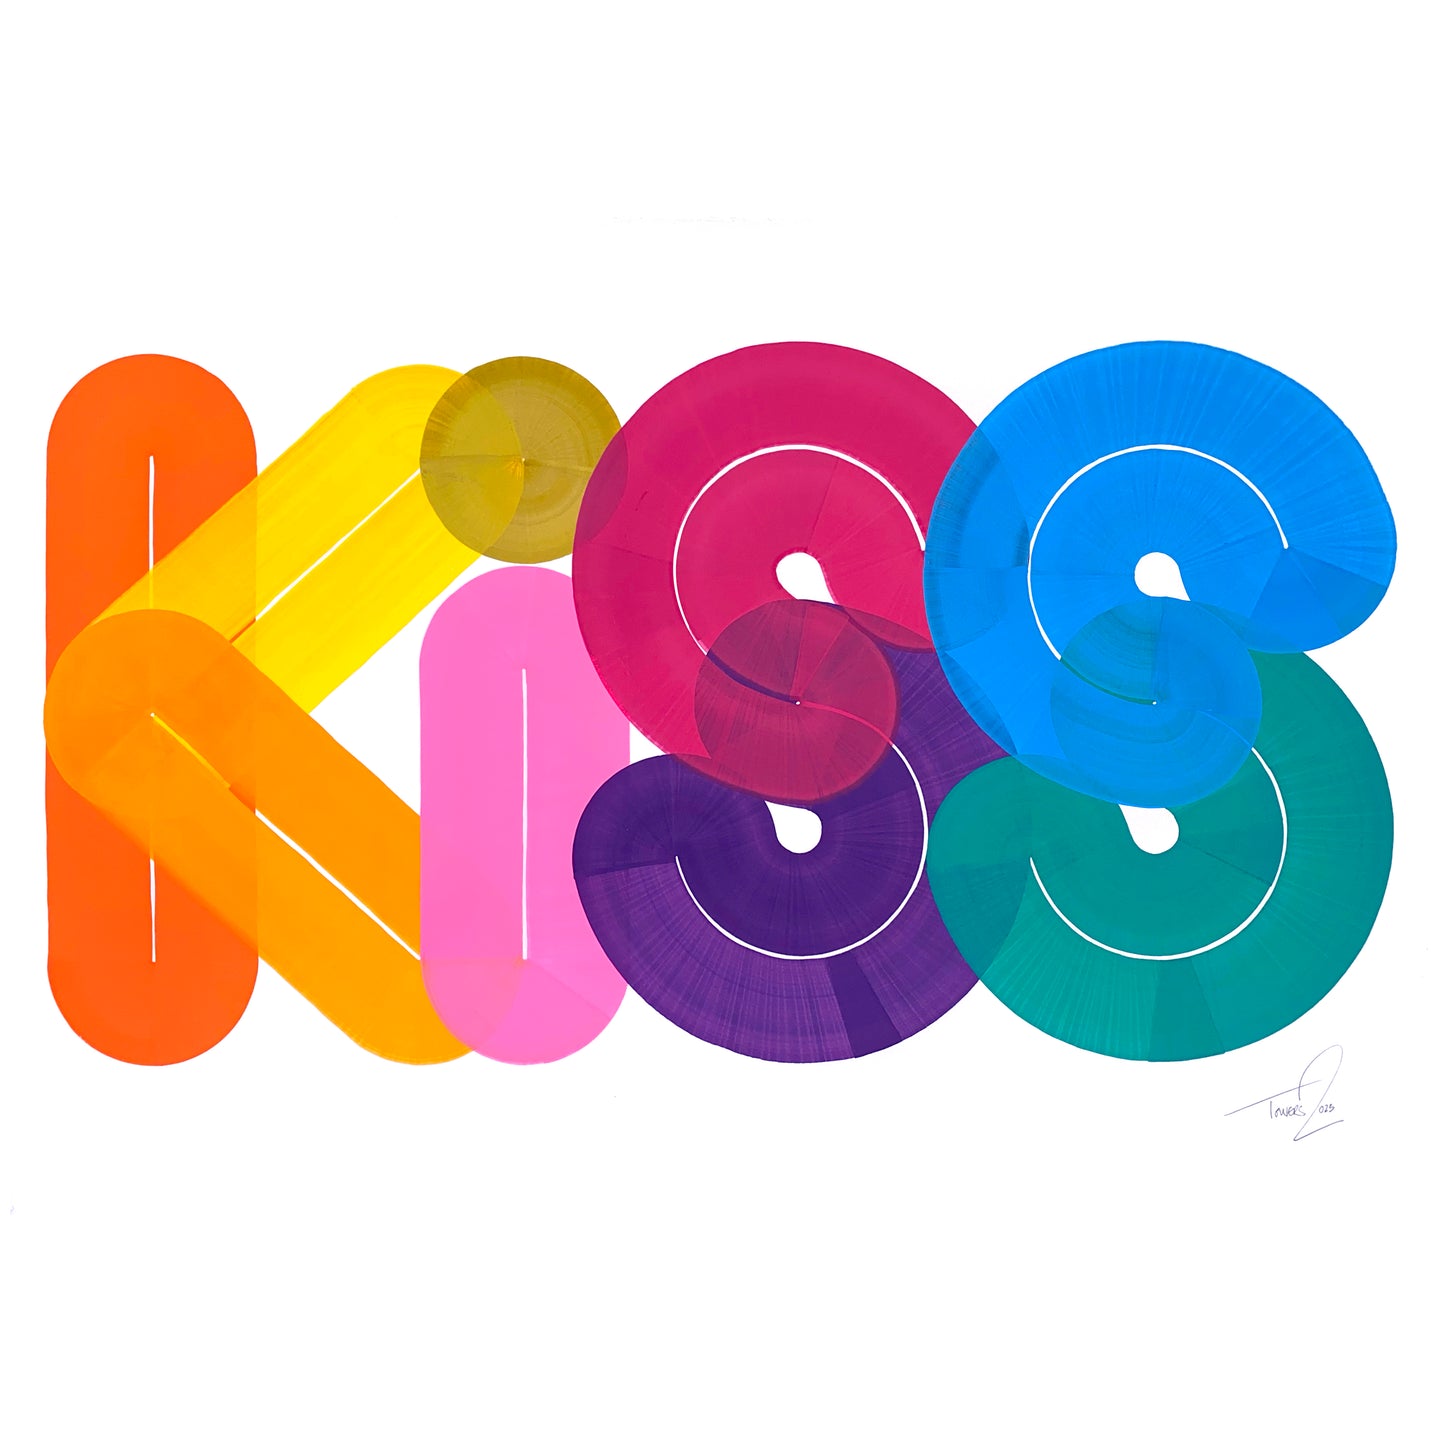 A Paper Edition - KISS A1